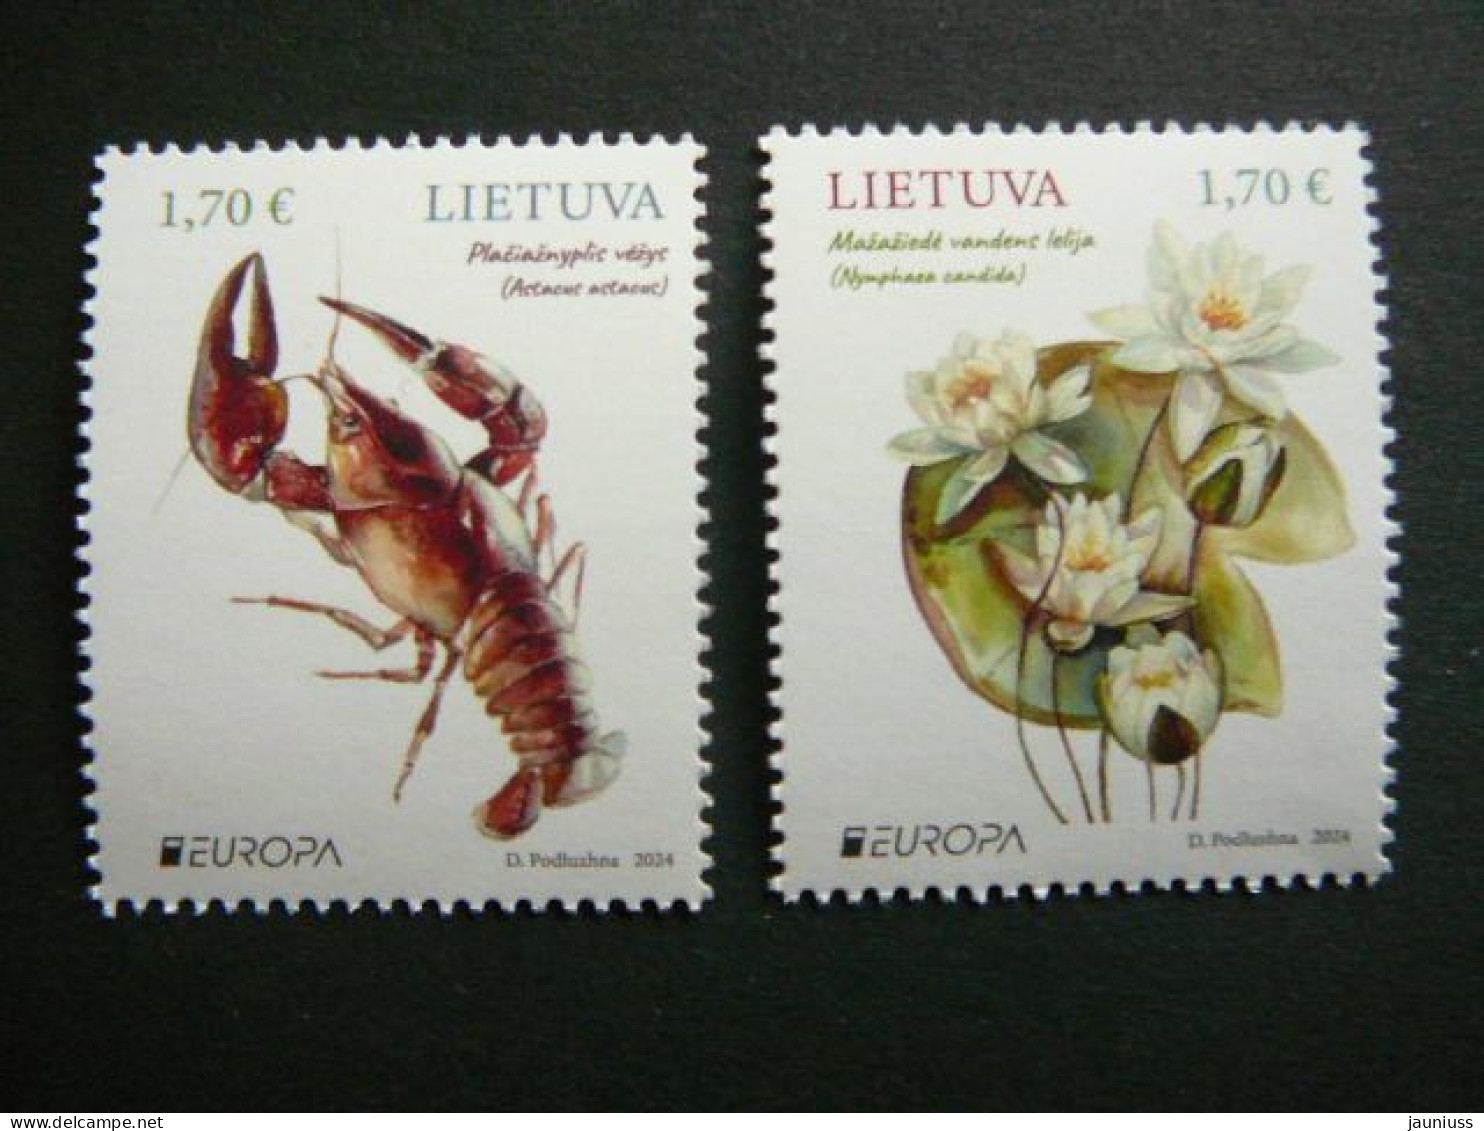 Europa CEPT. Crayfish, Water Lily # Lietuva Litauen Lituanie Litouwen Lithuania # 2024 MNH #2 - Lithuania